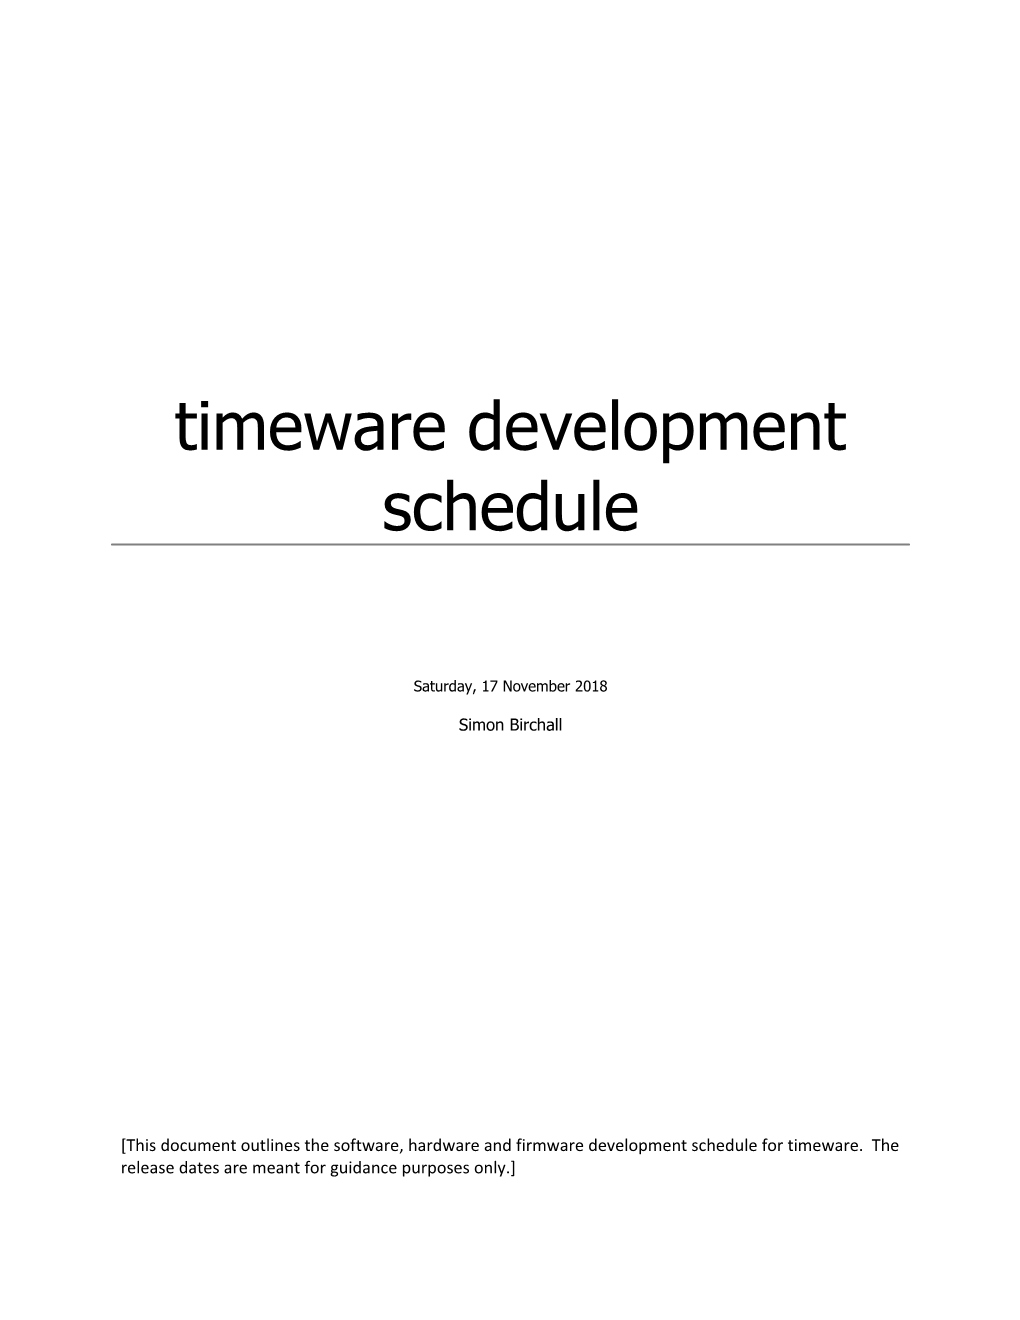 Timeware 2010 Development Schedule